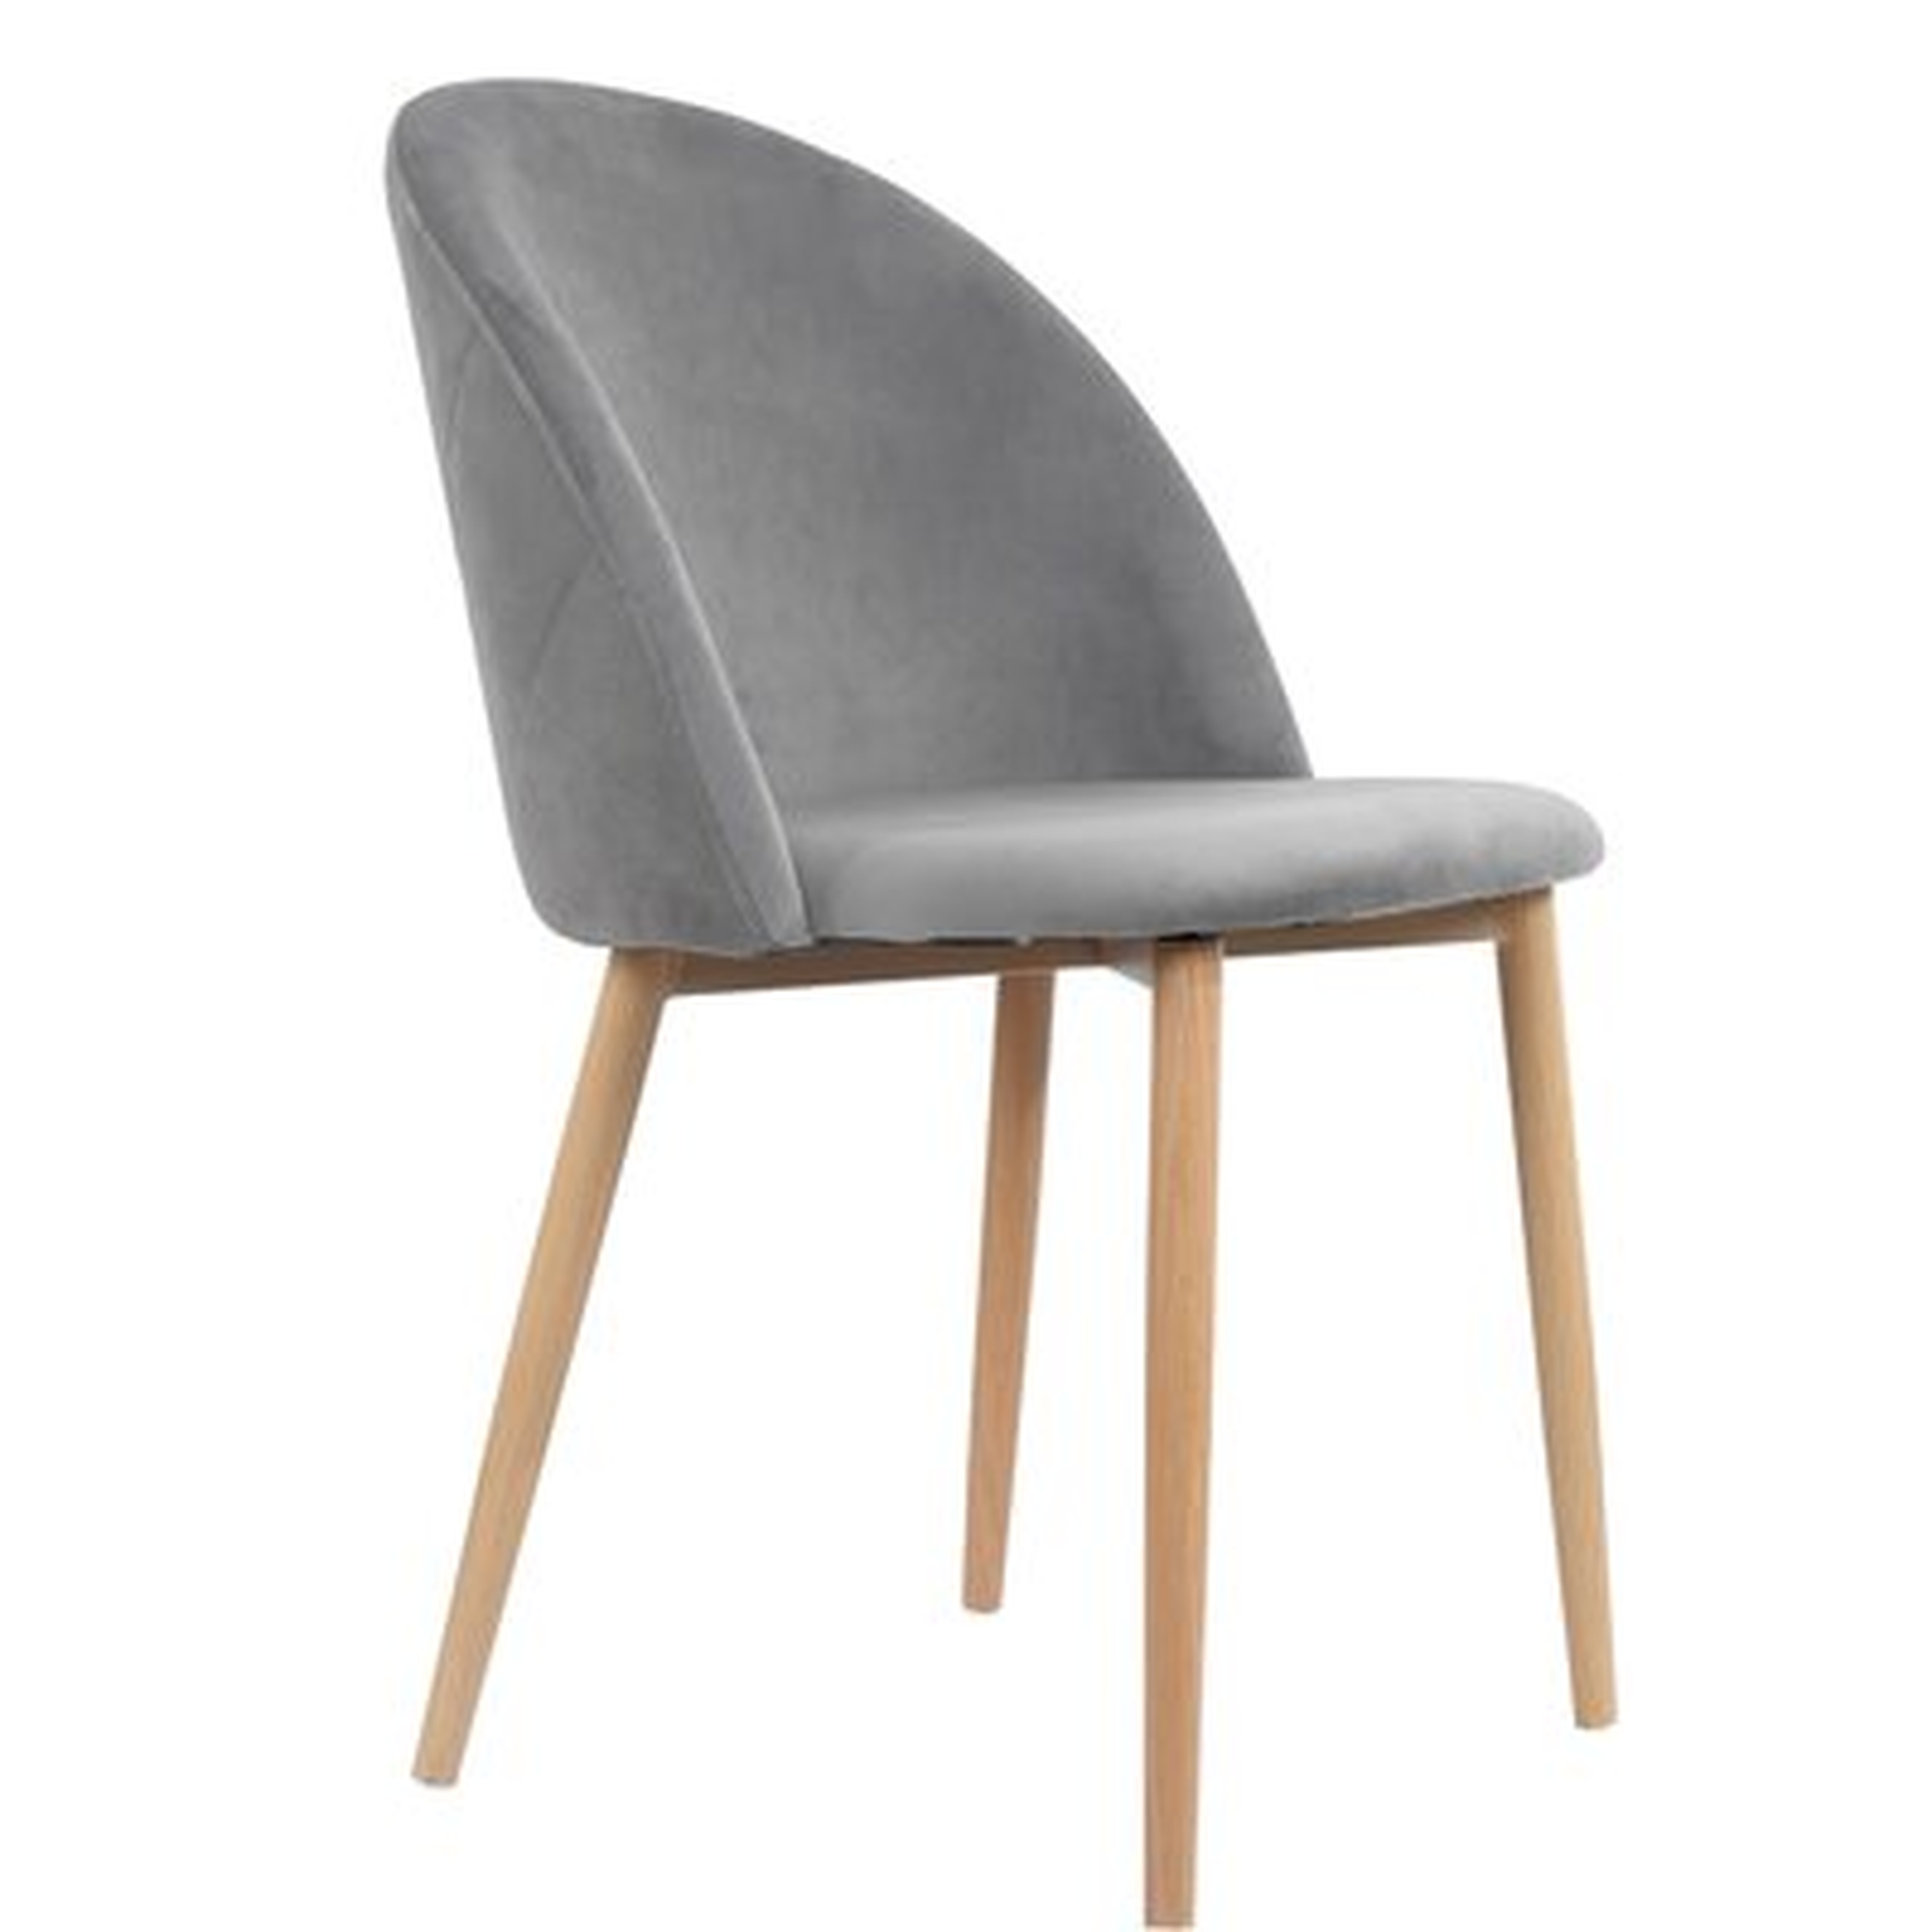 Kerstetter Upholstered Dining Chair - Wayfair